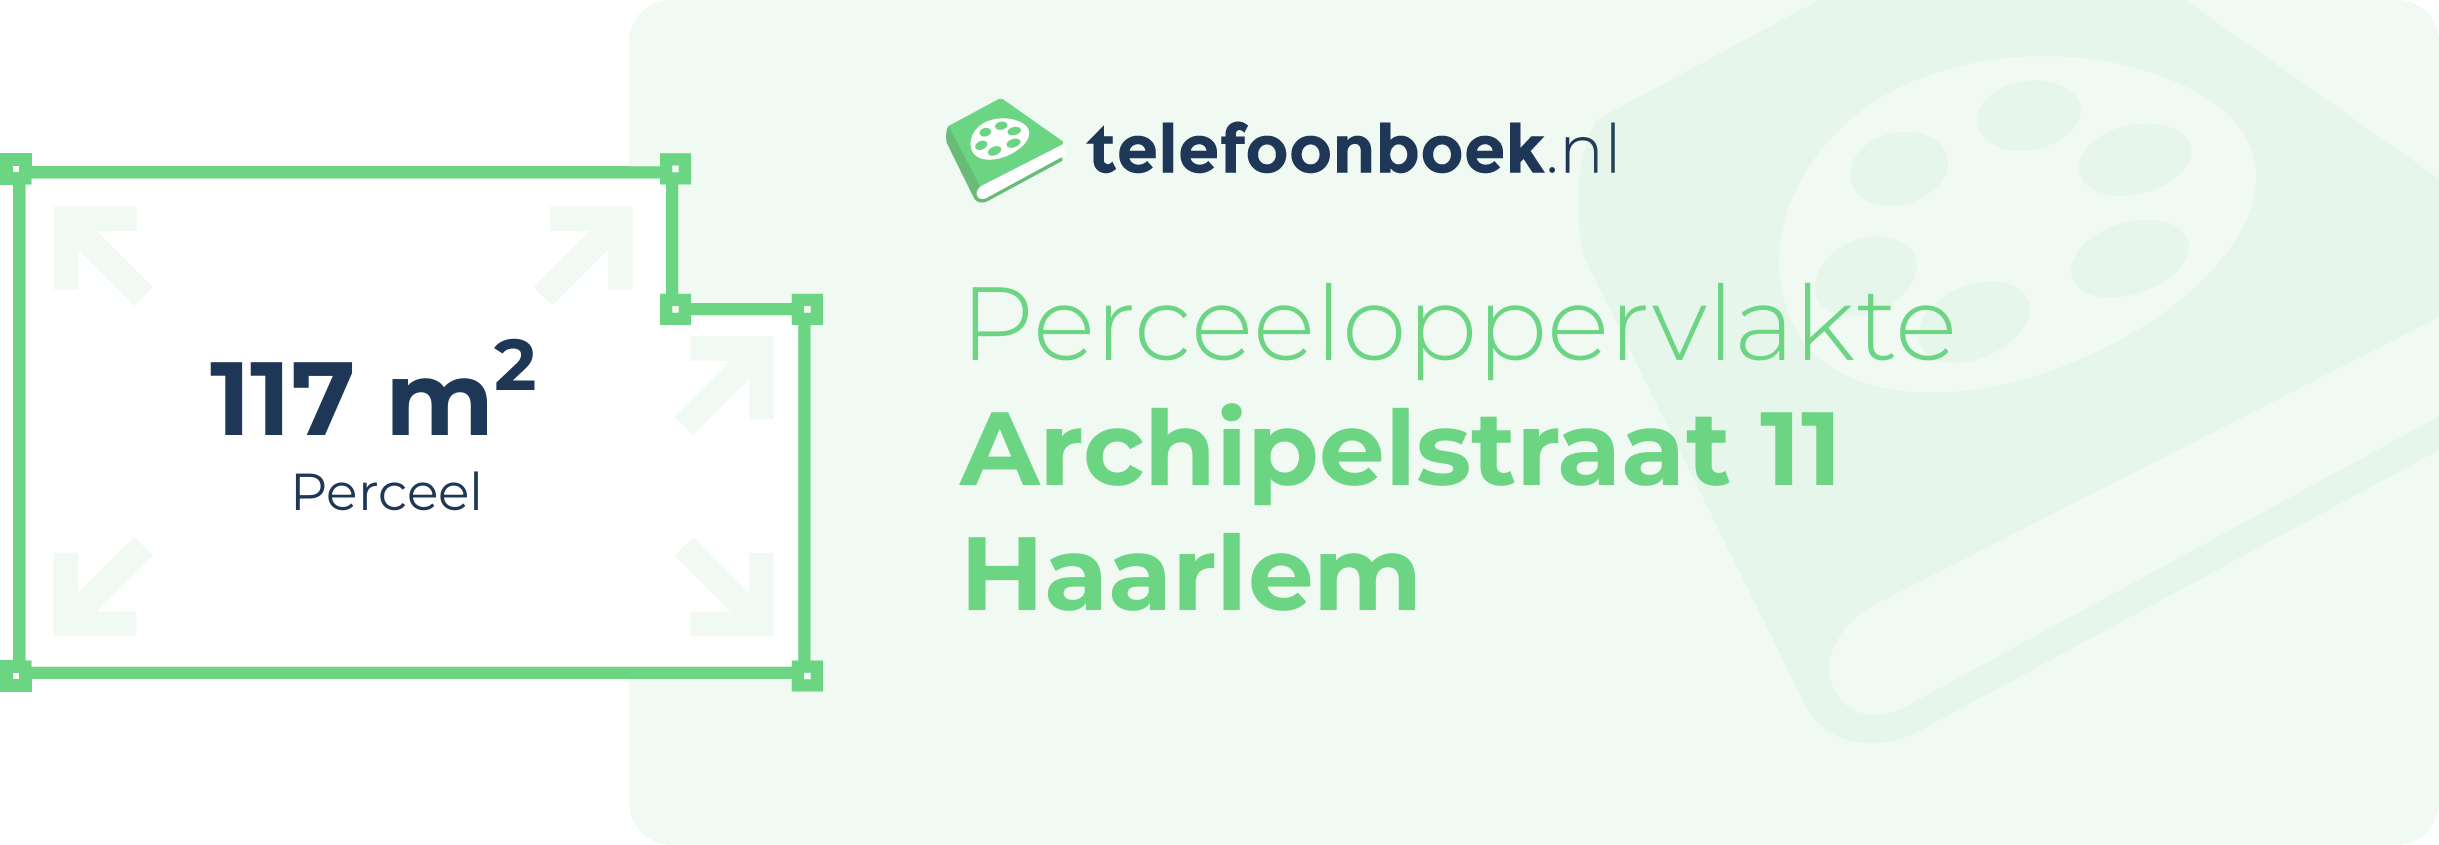 Perceeloppervlakte Archipelstraat 11 Haarlem